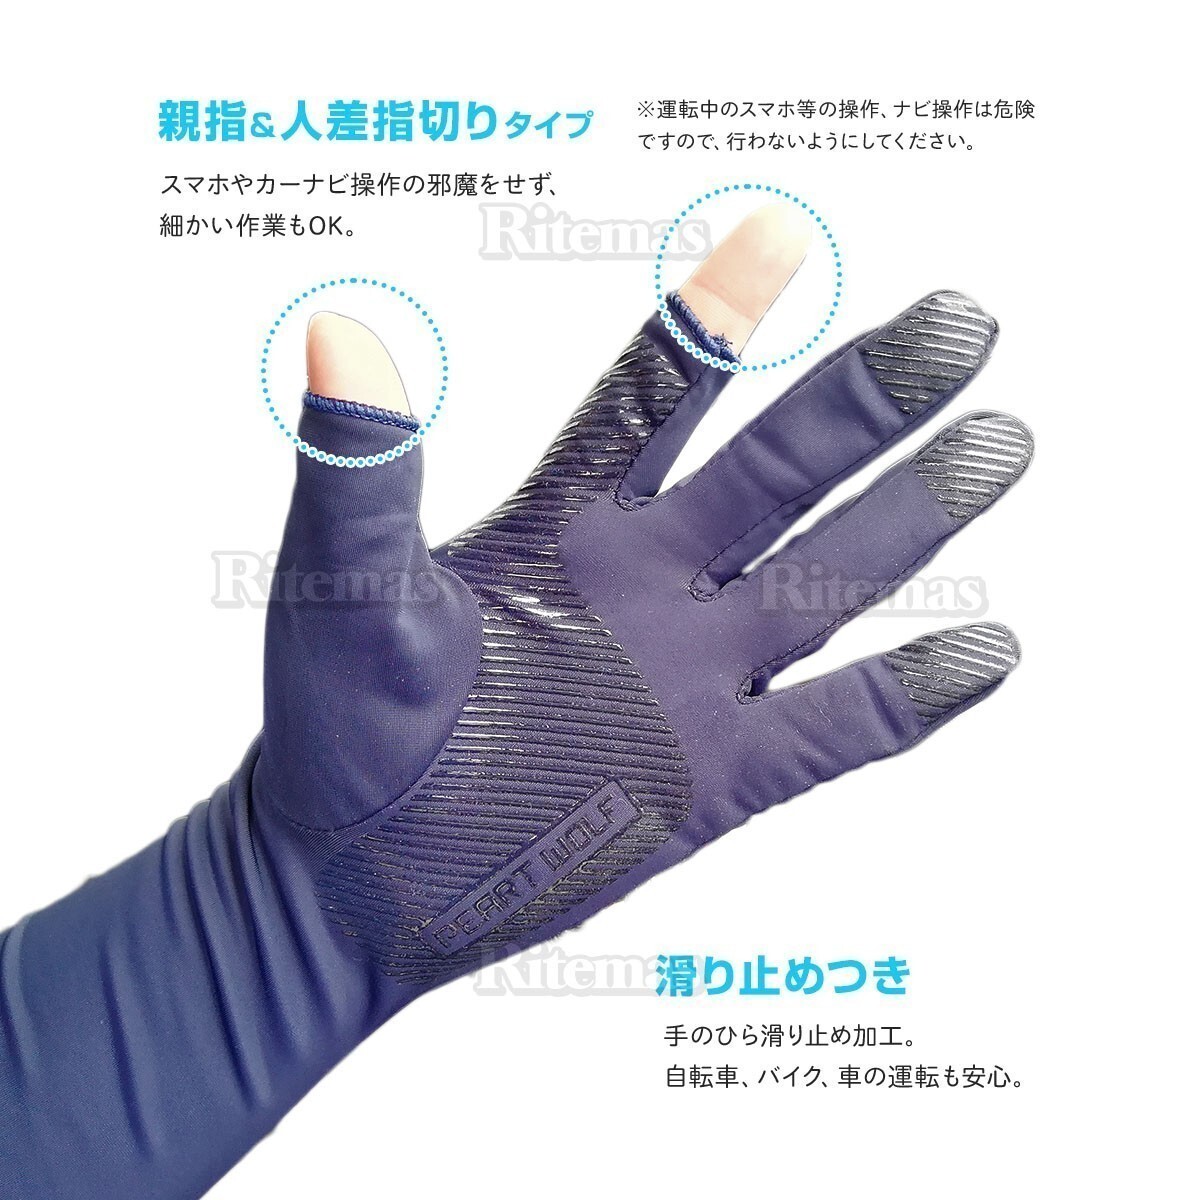 UVカット 冷感アームカバー UV対策 紫外線対策 接触冷感 腕カバー UV手袋 涼しい 夏用 手袋 運転 親指 人差し指 スマホ 滑り止め ブルーの画像4